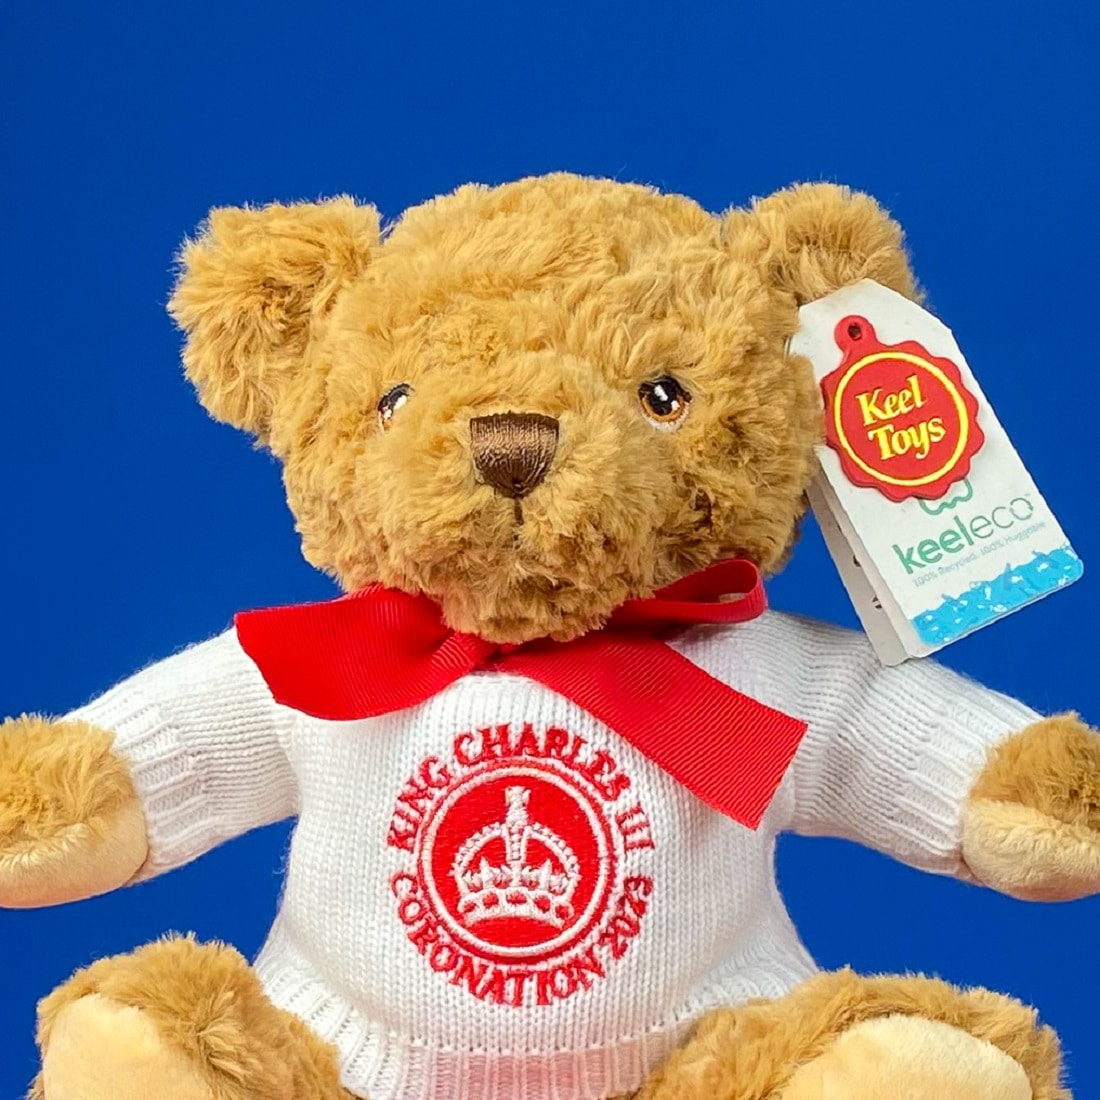 king charles commemorative teddy bear